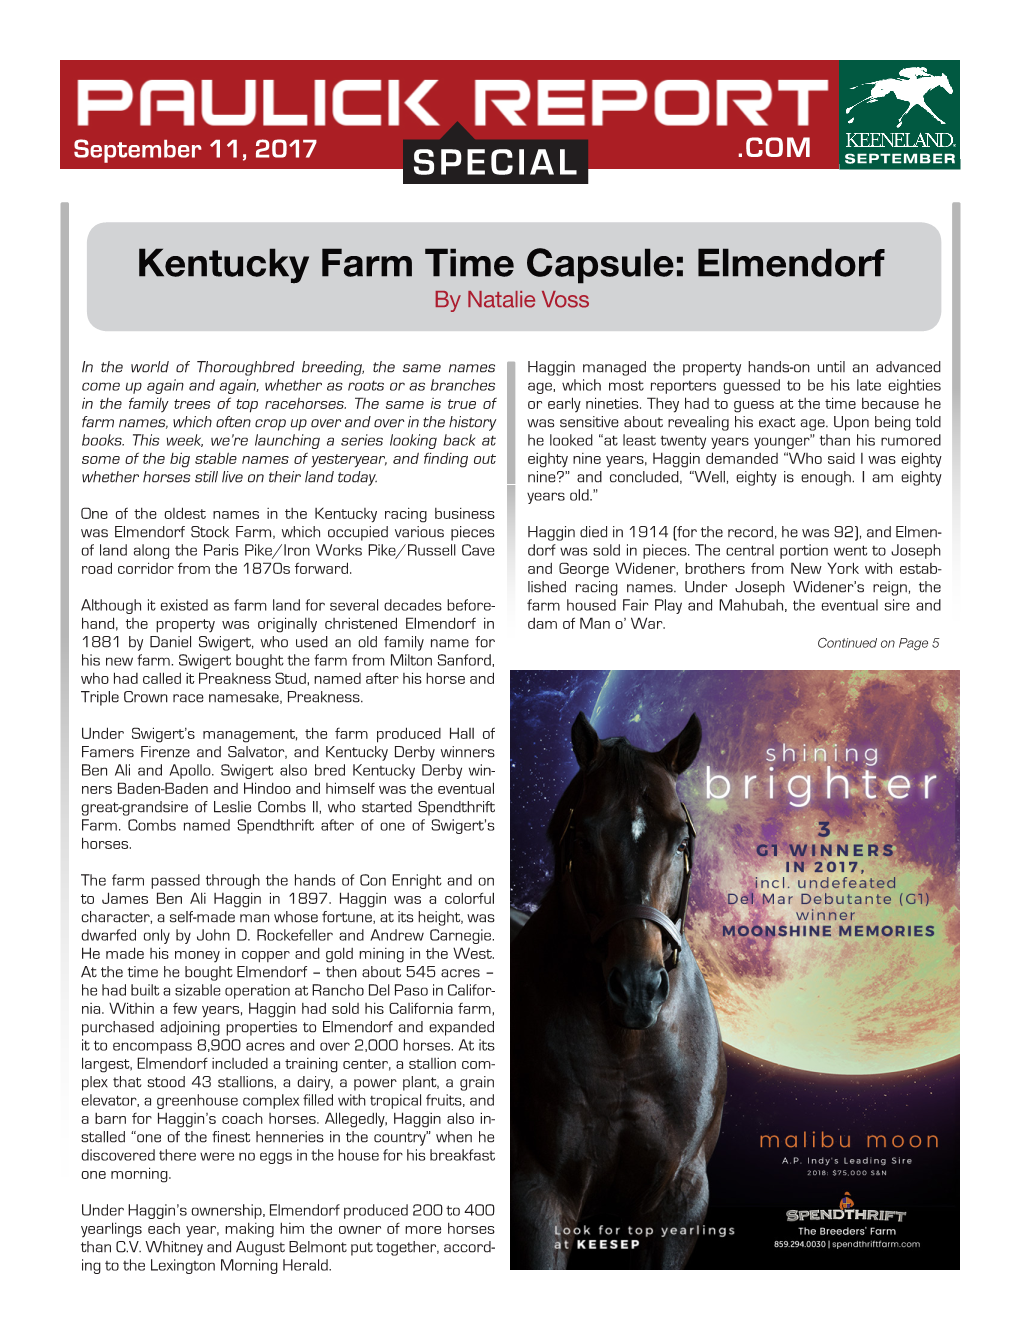 Kentucky Farm Time Capsule: Elmendorf by Natalie Voss